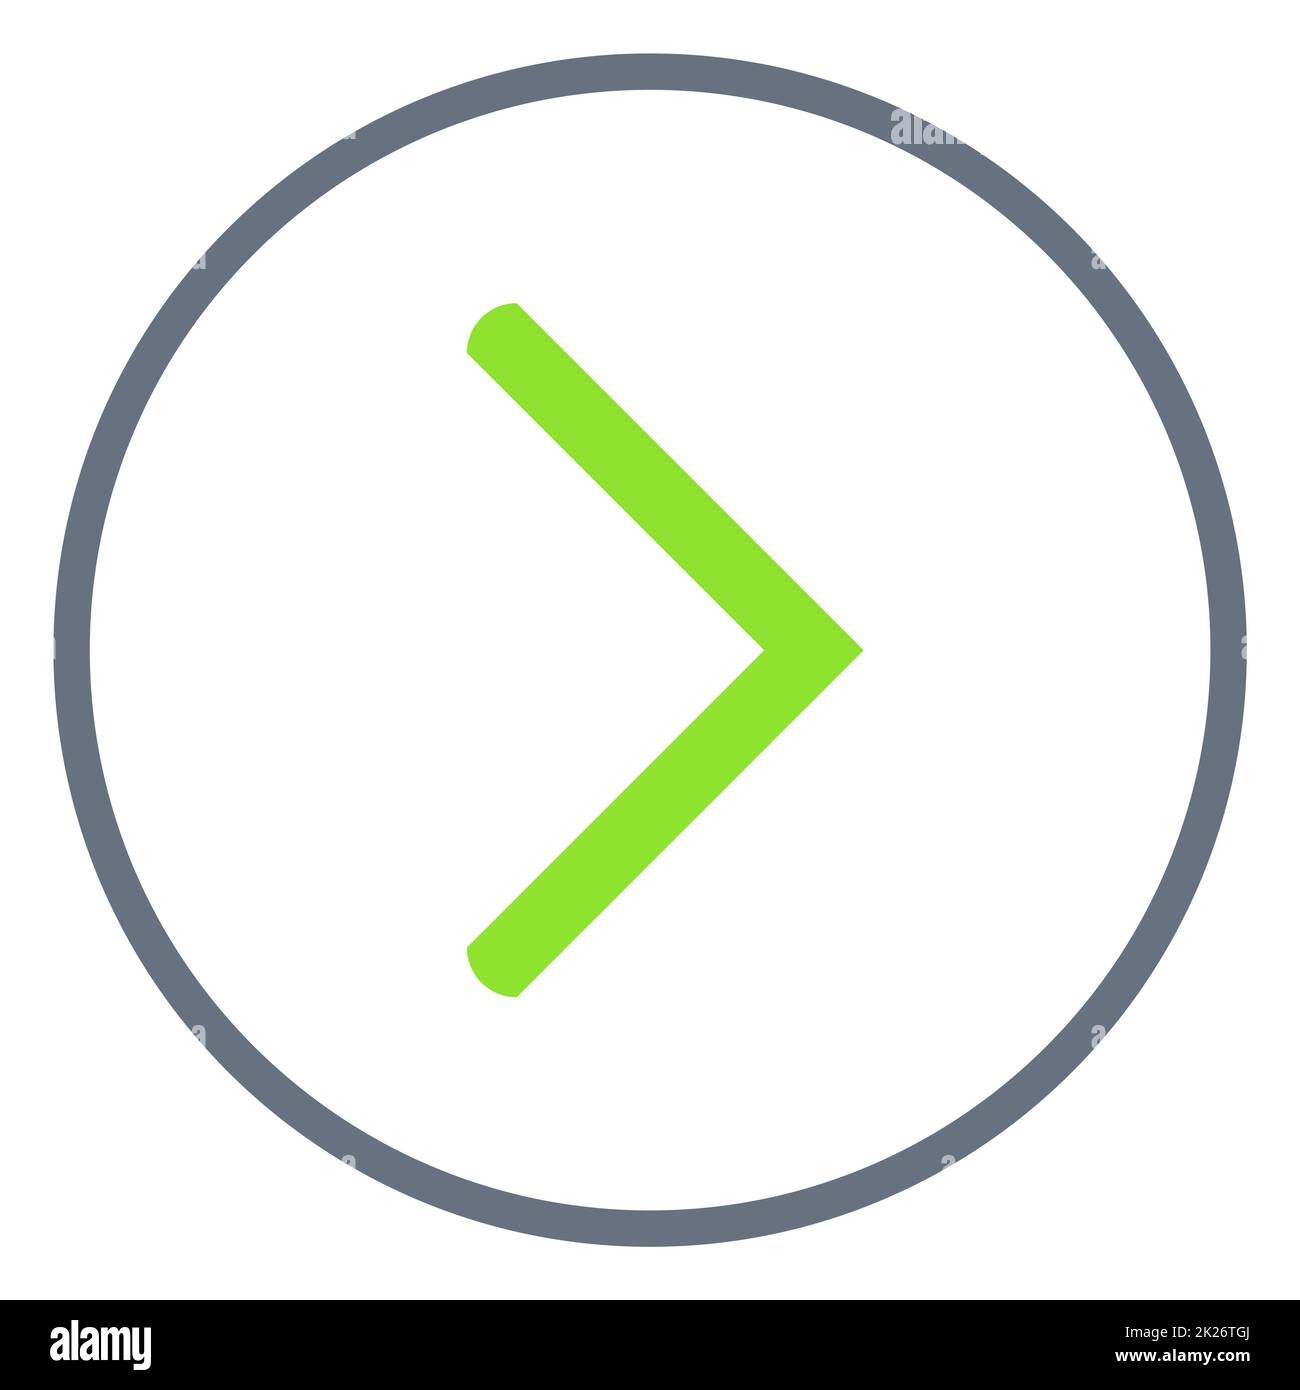 Grey circle with green Arrow symbol Stock Photo